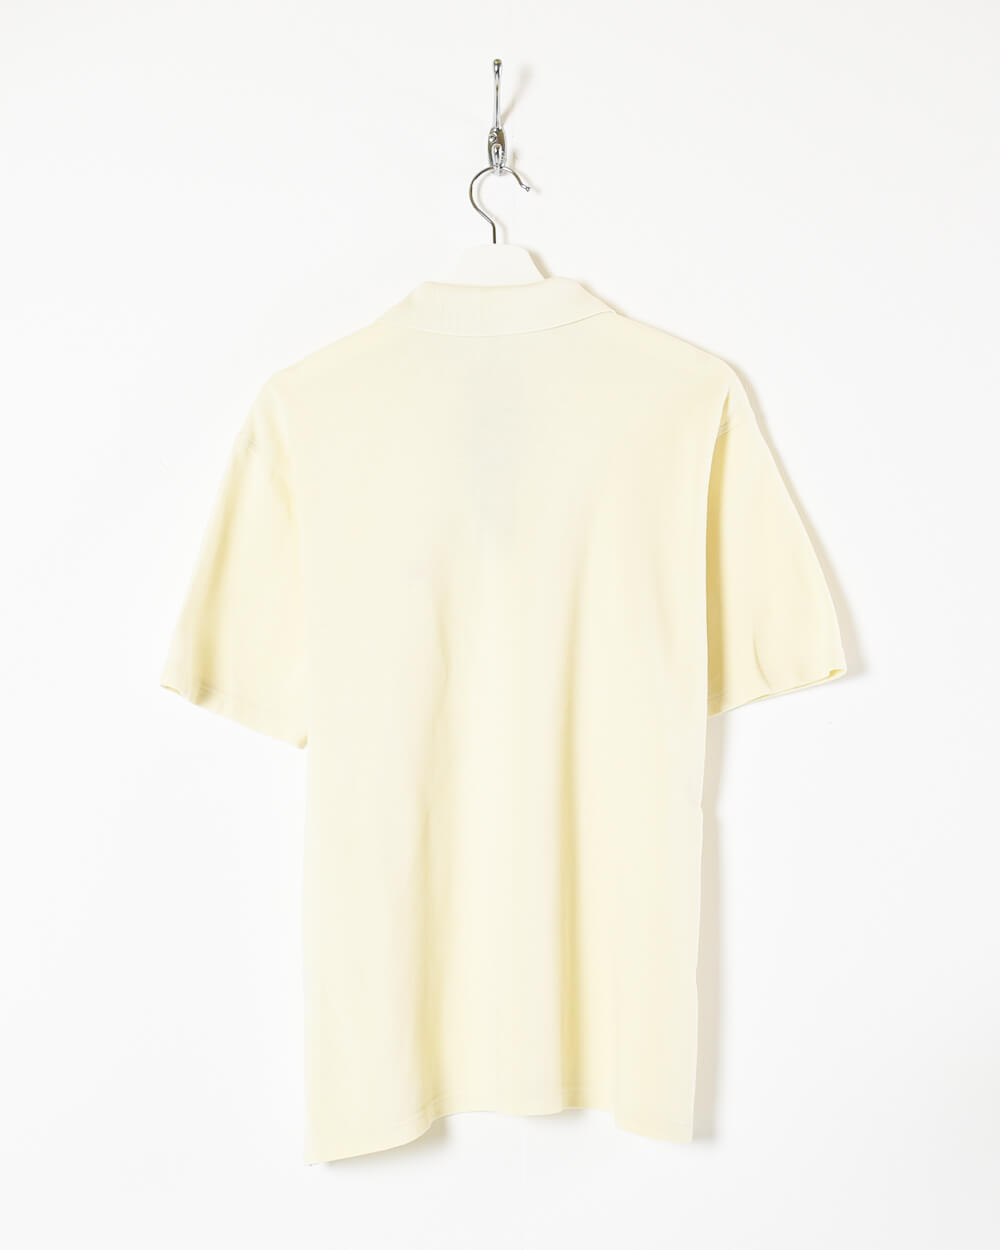 Neutral Burberrys Polo Shirt - Large